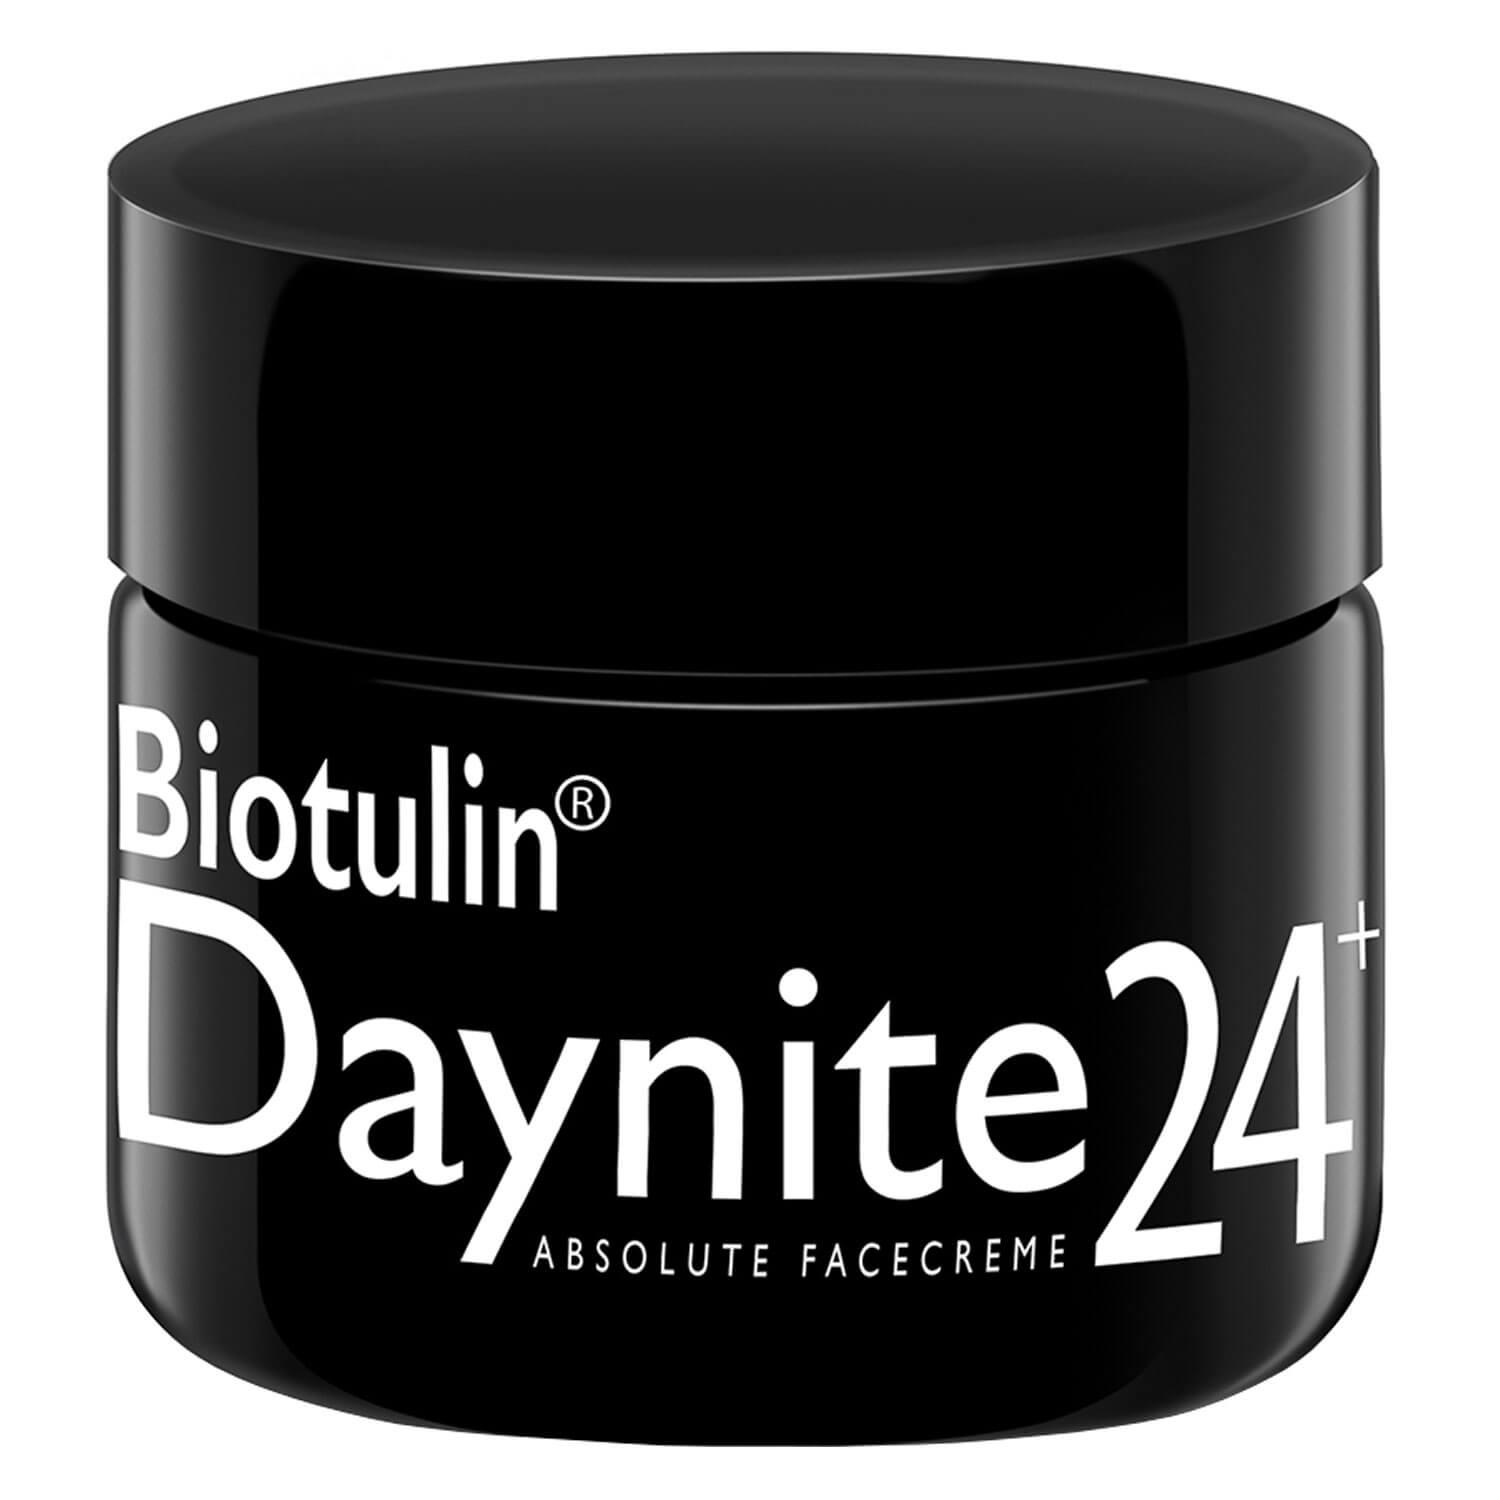 Biotulin - Daynite24+